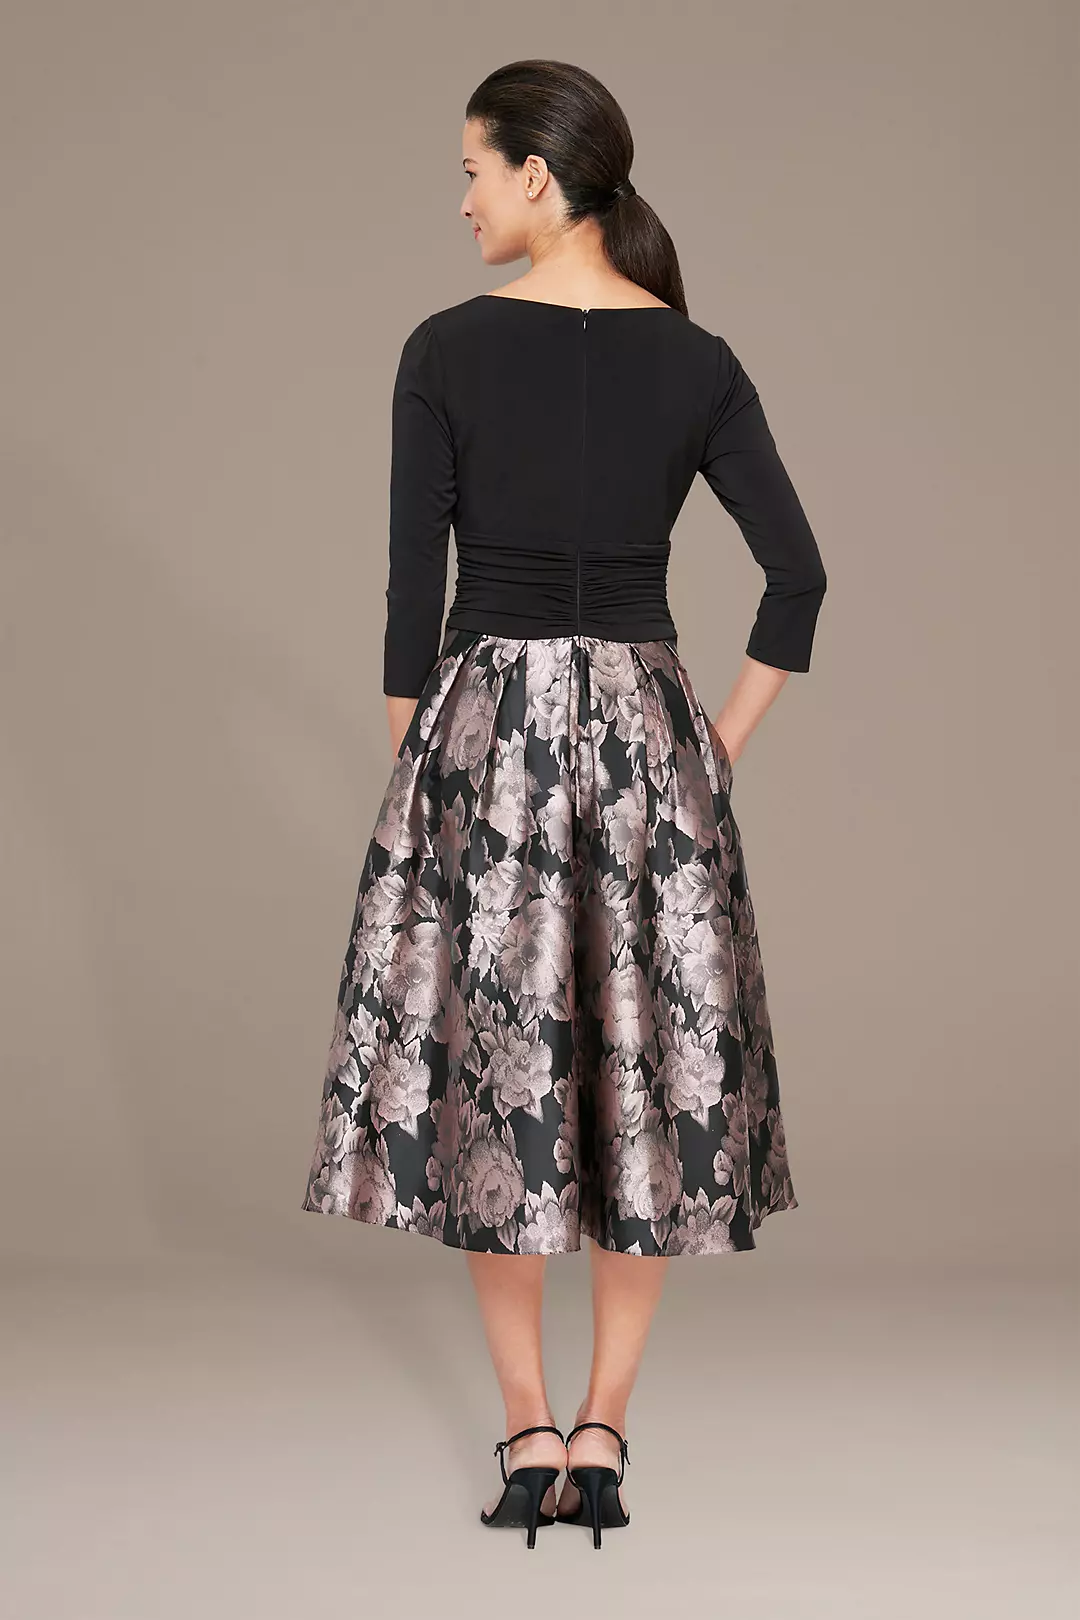 Black Floral Print Knee Length Dress (gbf8004a) at Rs 1399